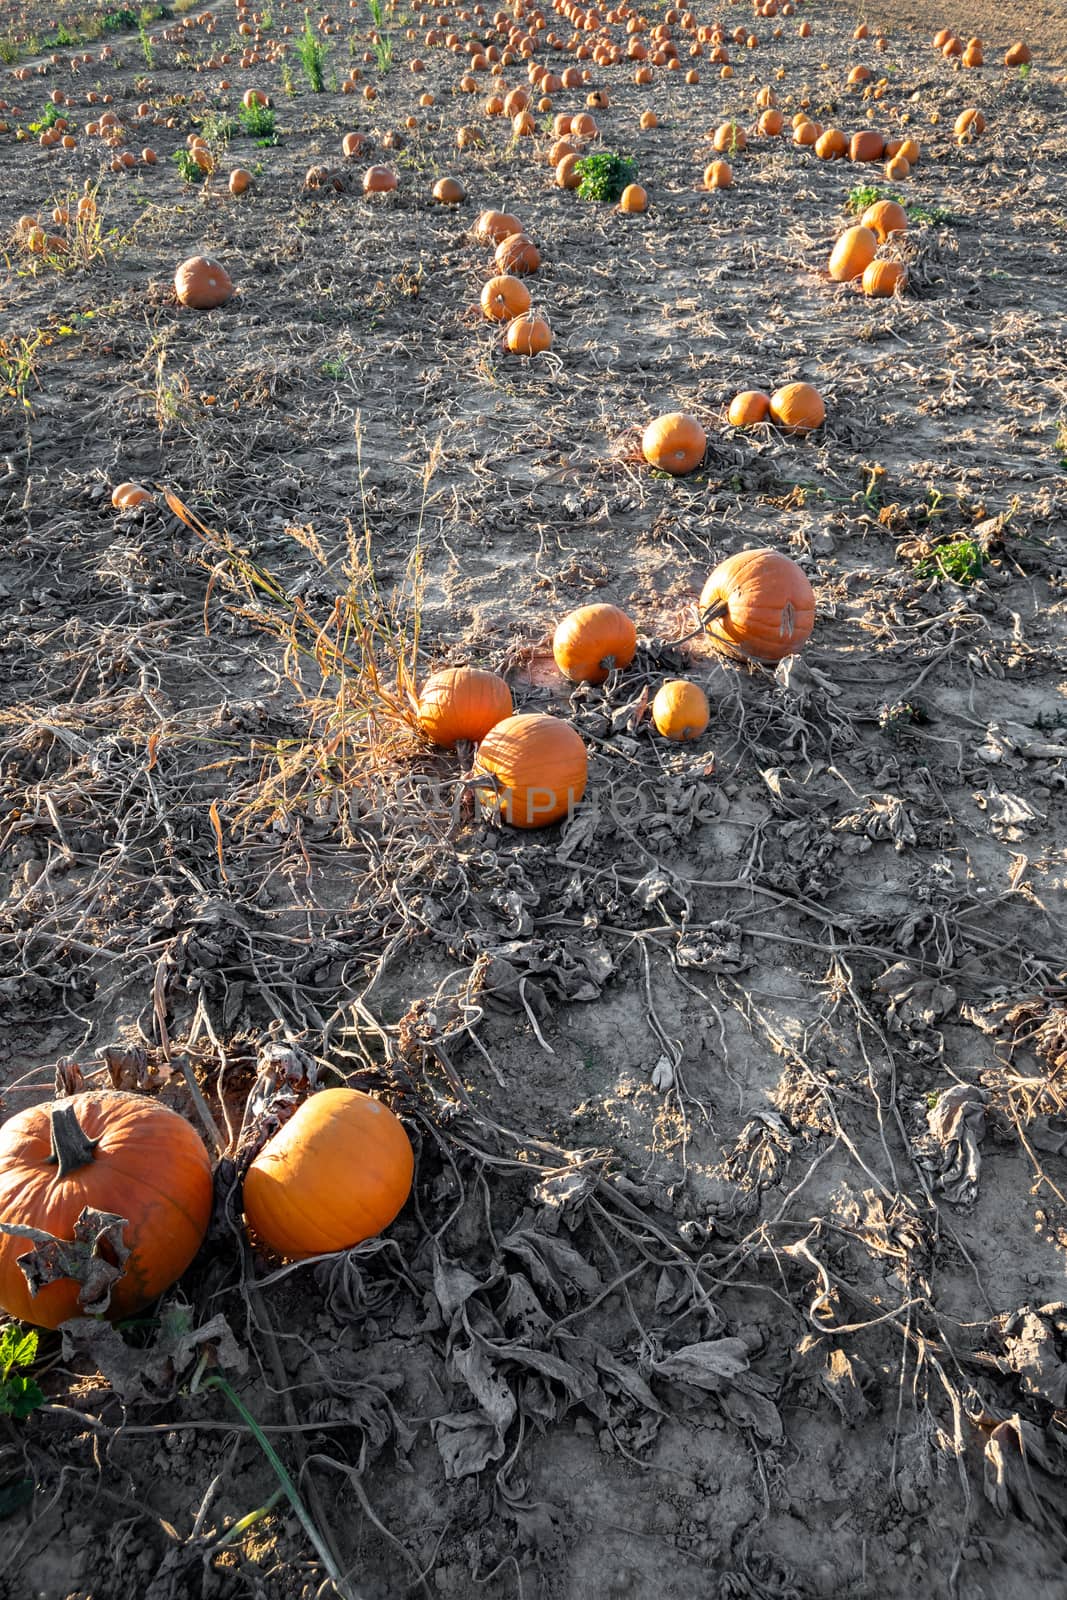 typical field of pumpkin by magann